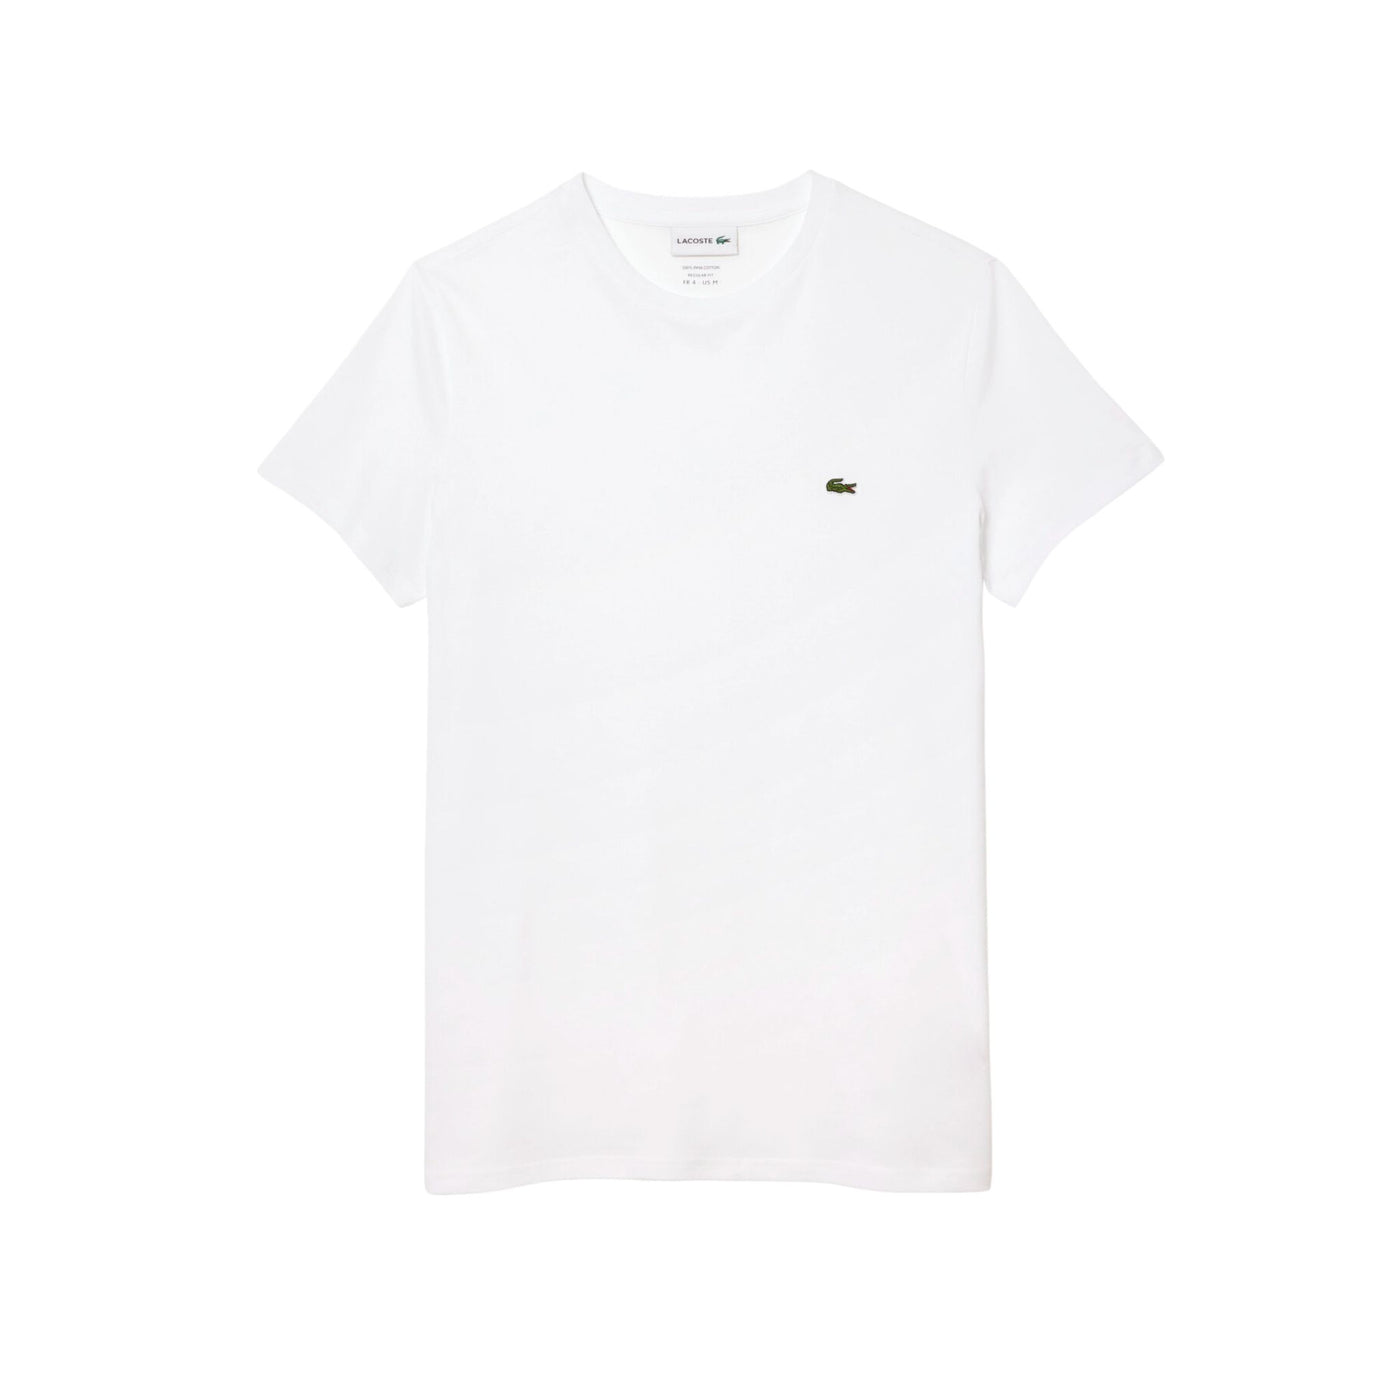 White cotton jersey men's t-shirt